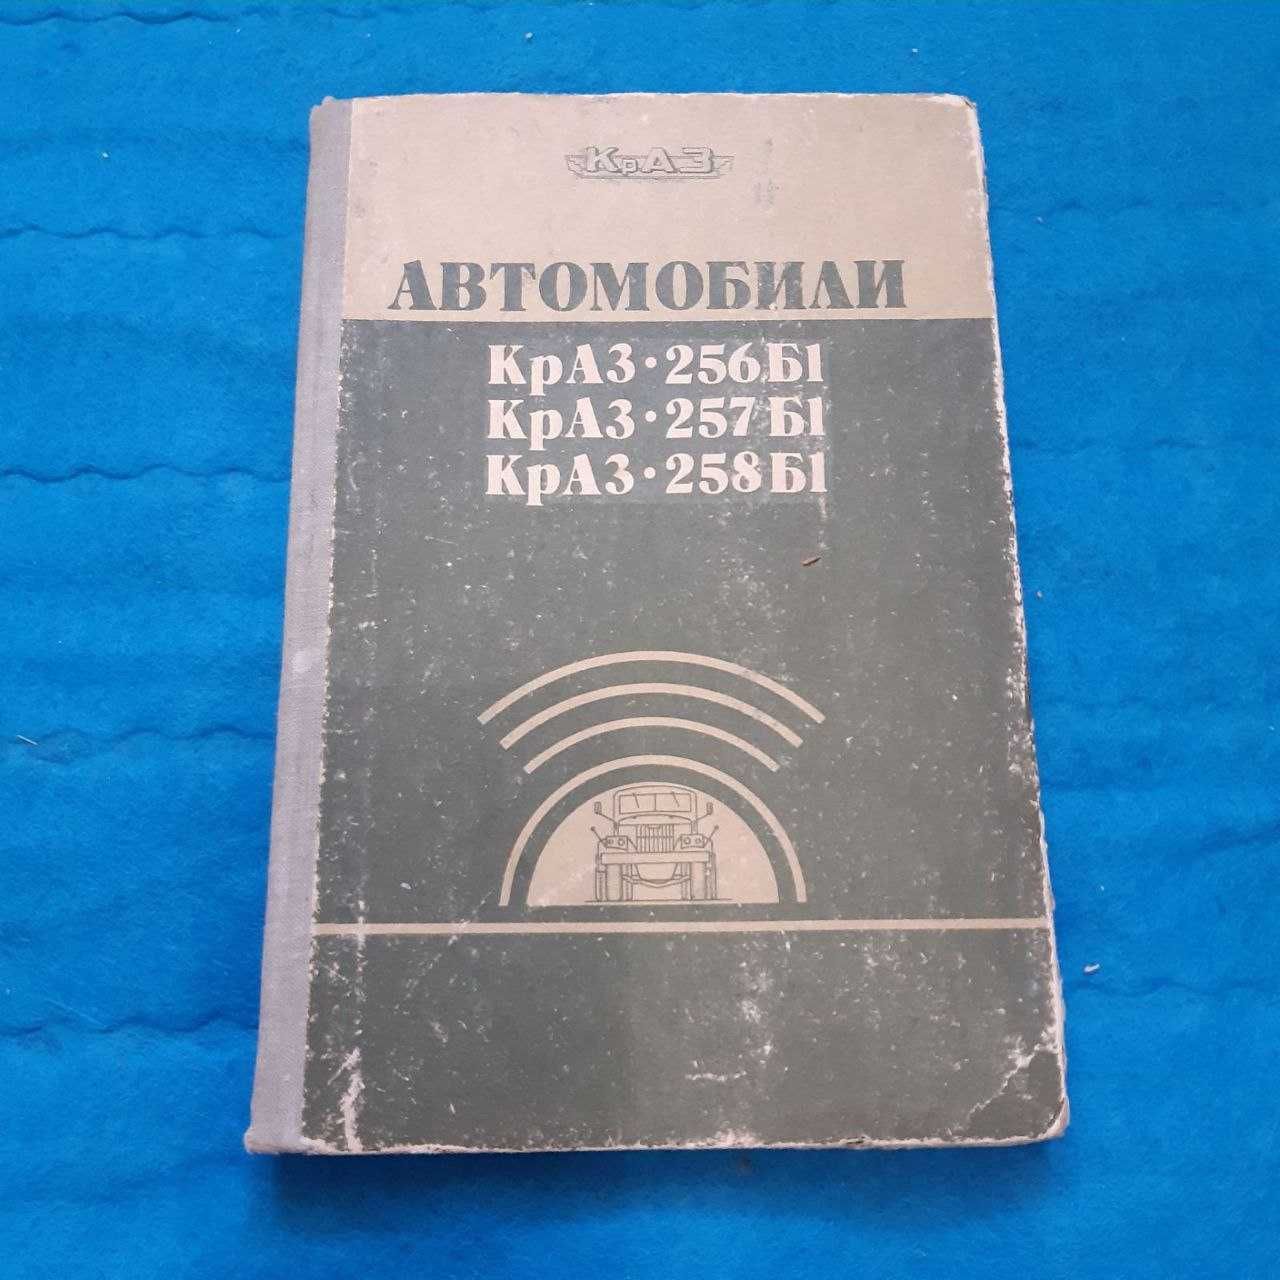 Ретро авто книга "Автомобили КрАЗ-256Б1, 257Б1, 258Б1"